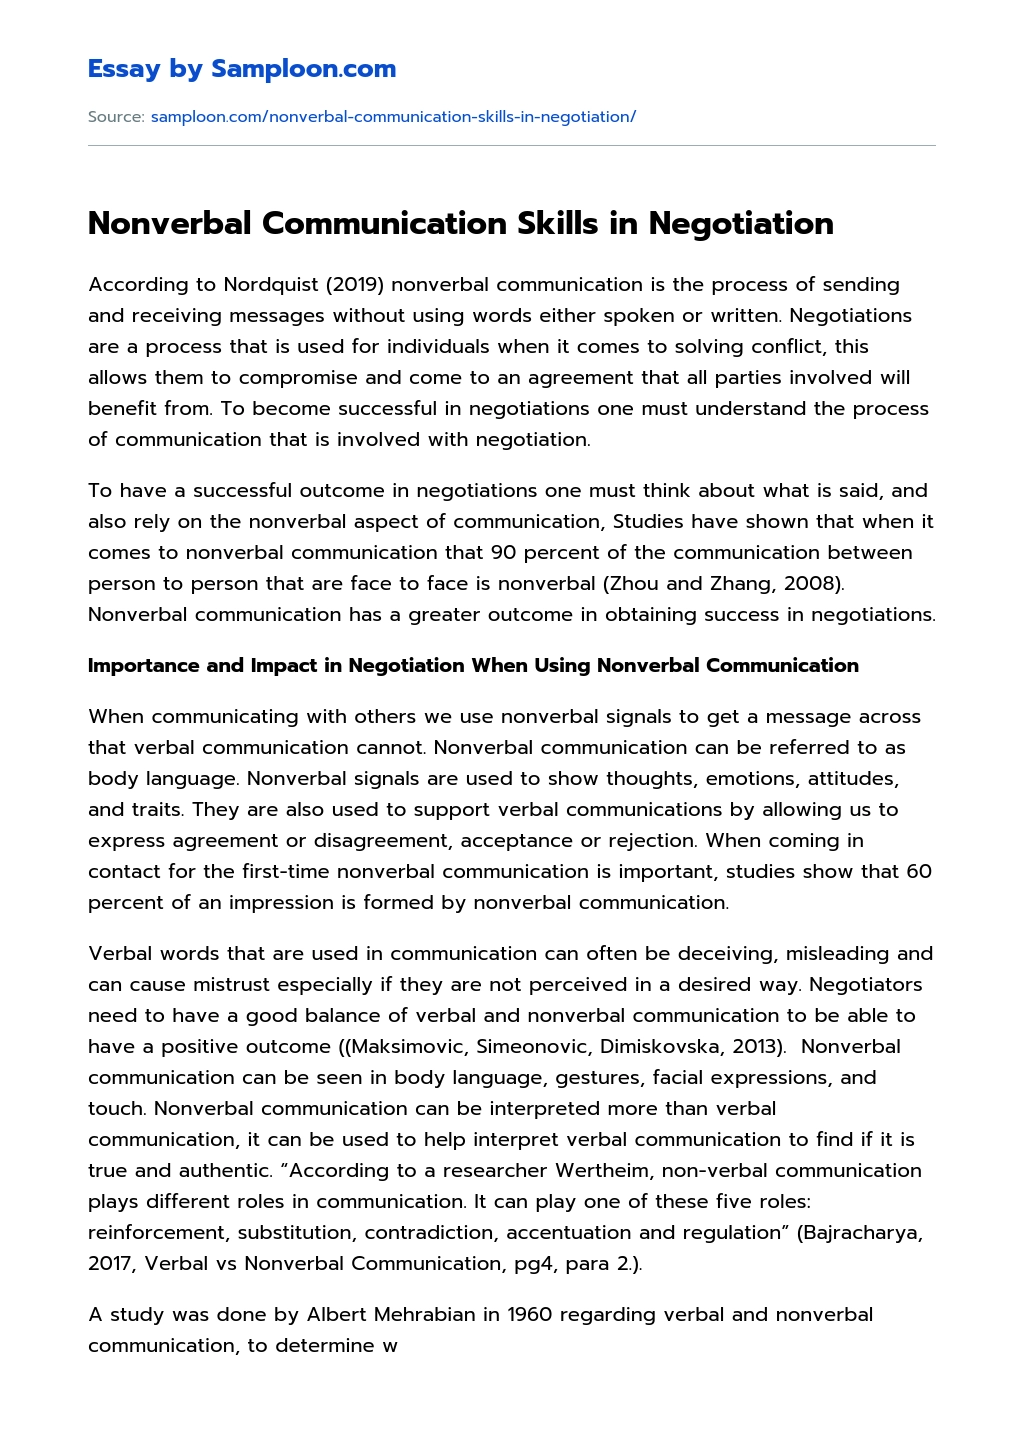 Nonverbal Communication Skills in Negotiation essay